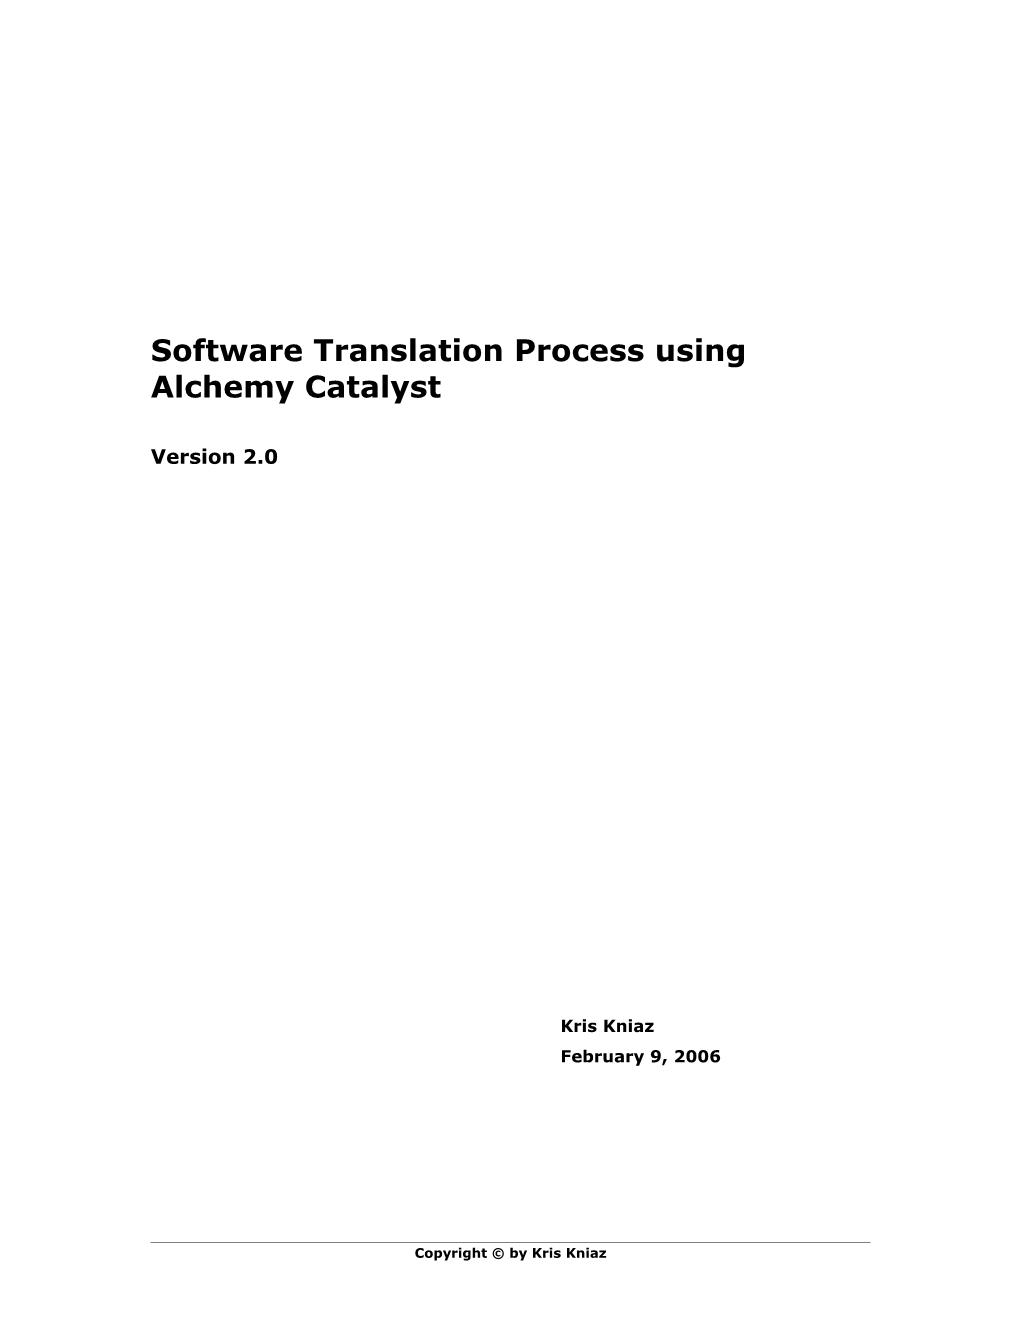 Software Translation Process Using Alchemy Catalyst